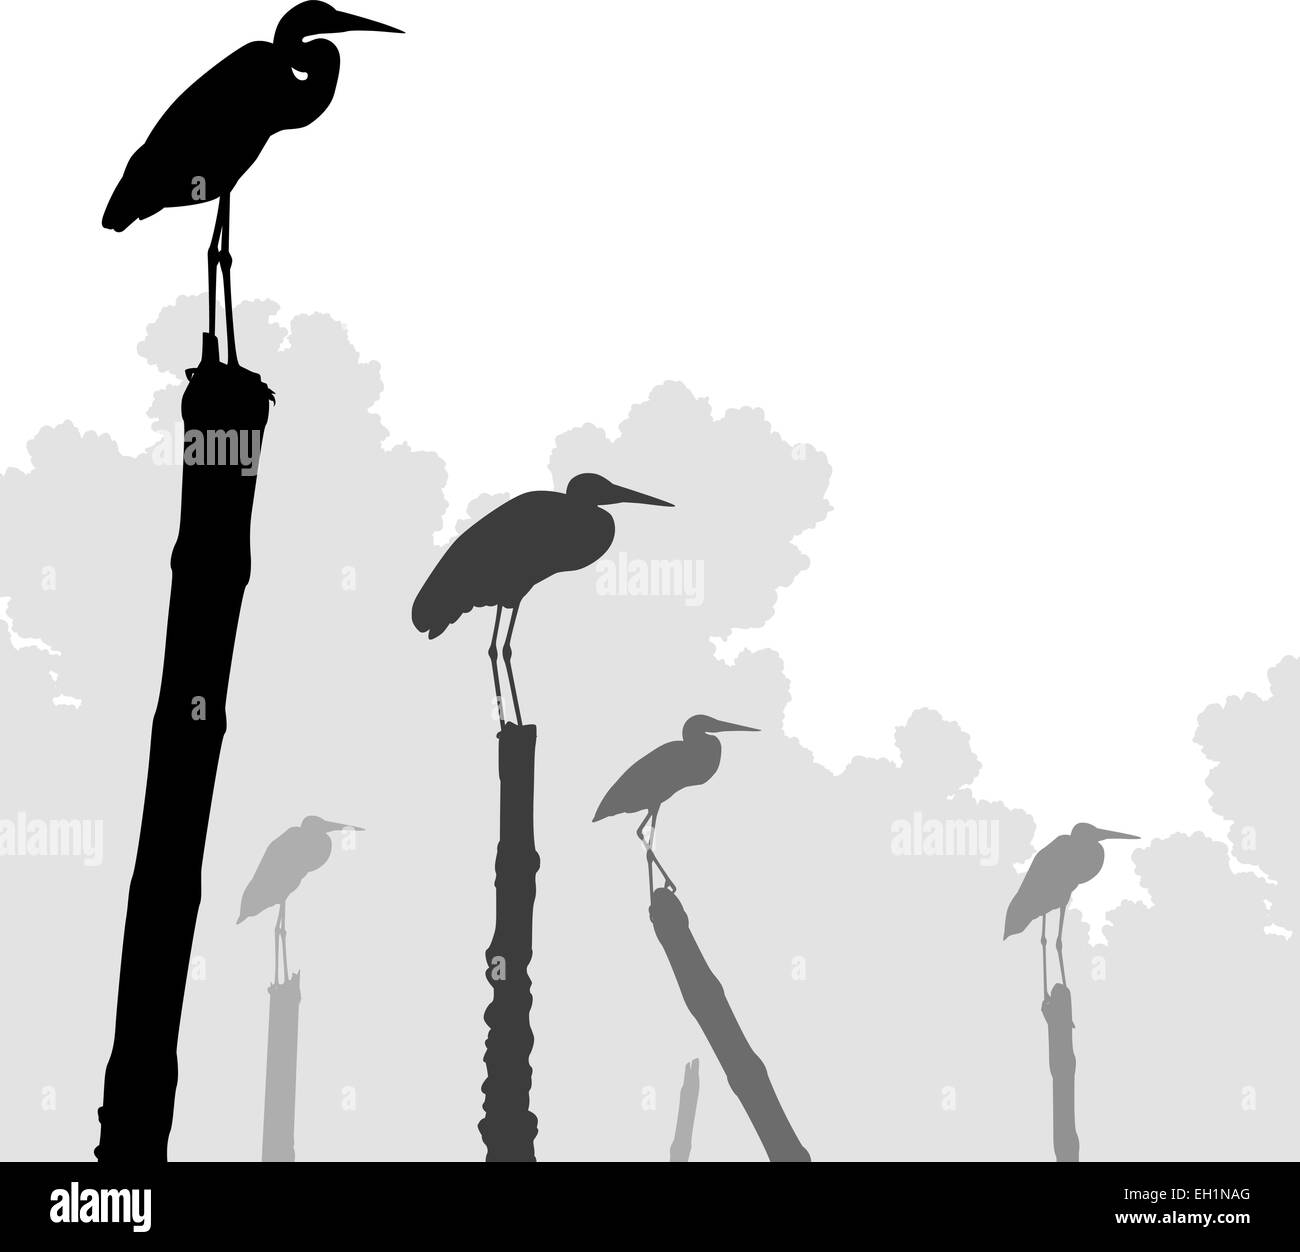 Ilustración vectorial editable de egret siluetas encaramado sobre postes con aves como objetos separados Ilustración del Vector